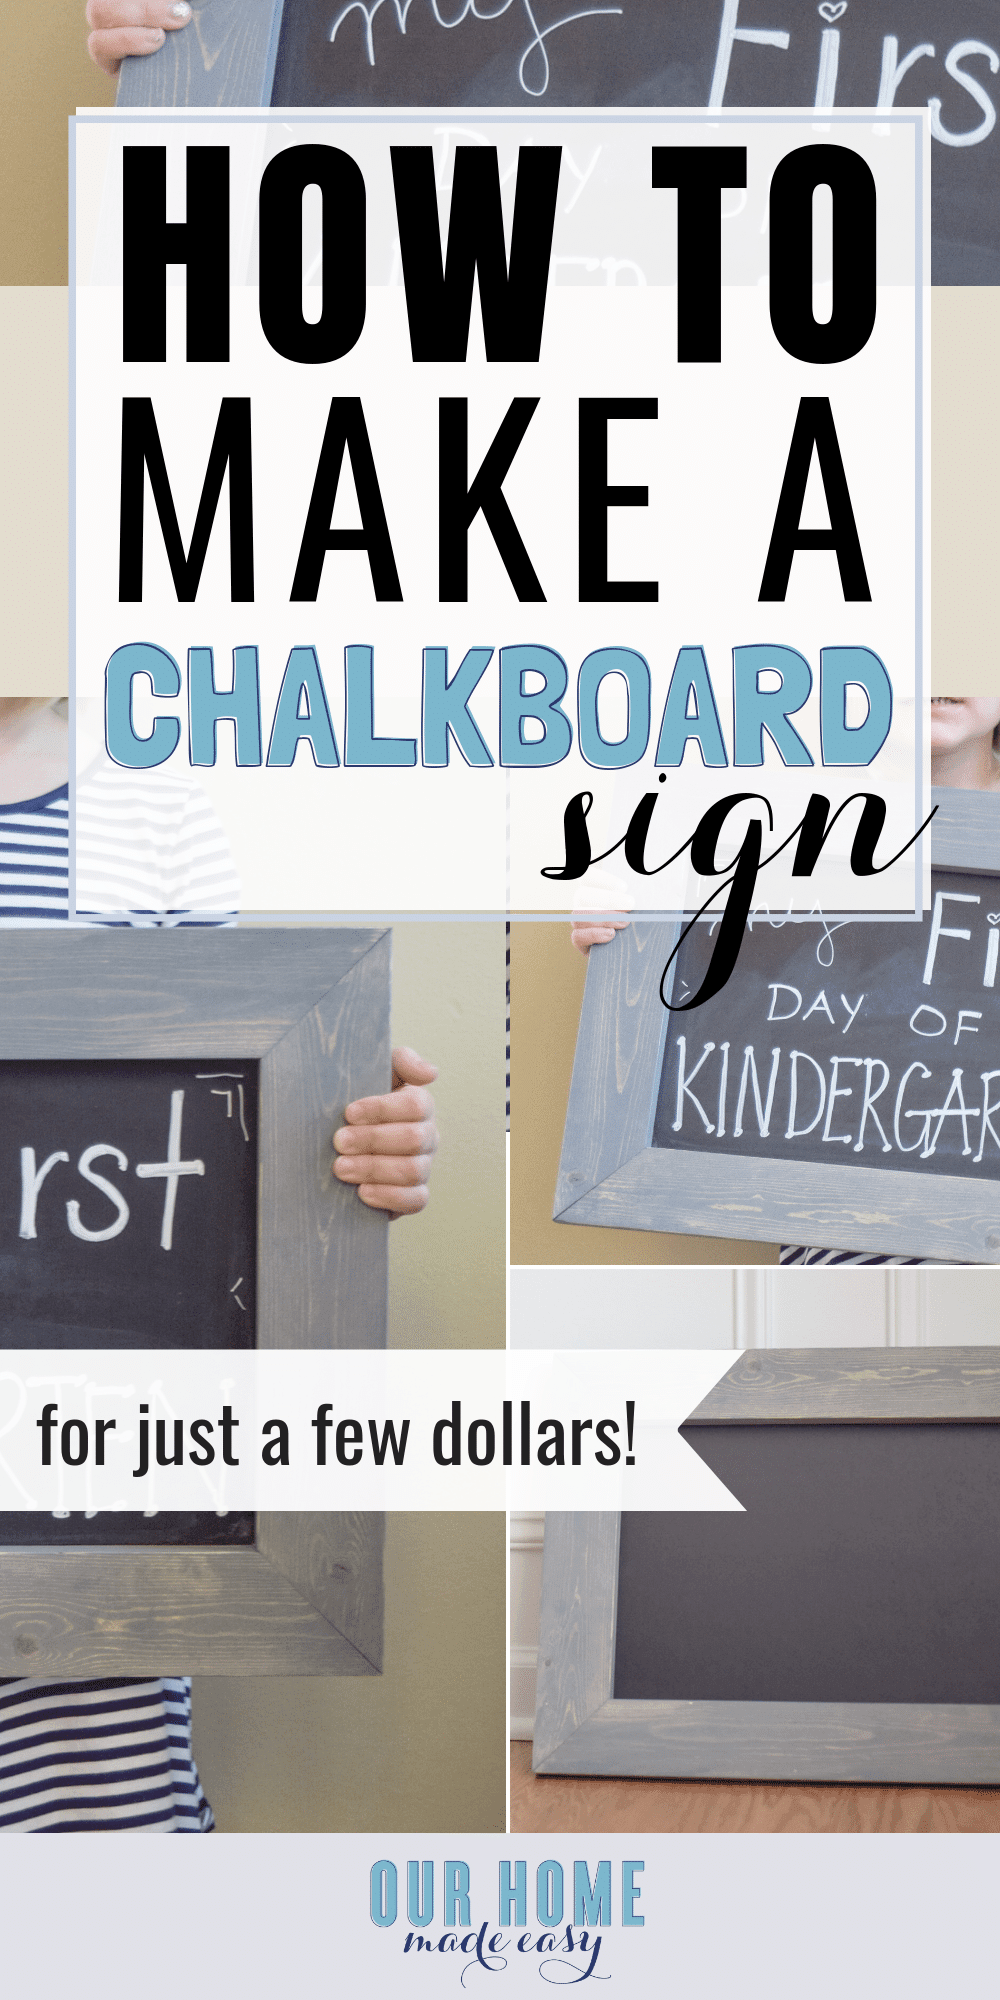 Personalized Small Chalkboard Signs / Mini Chalkboard Signs